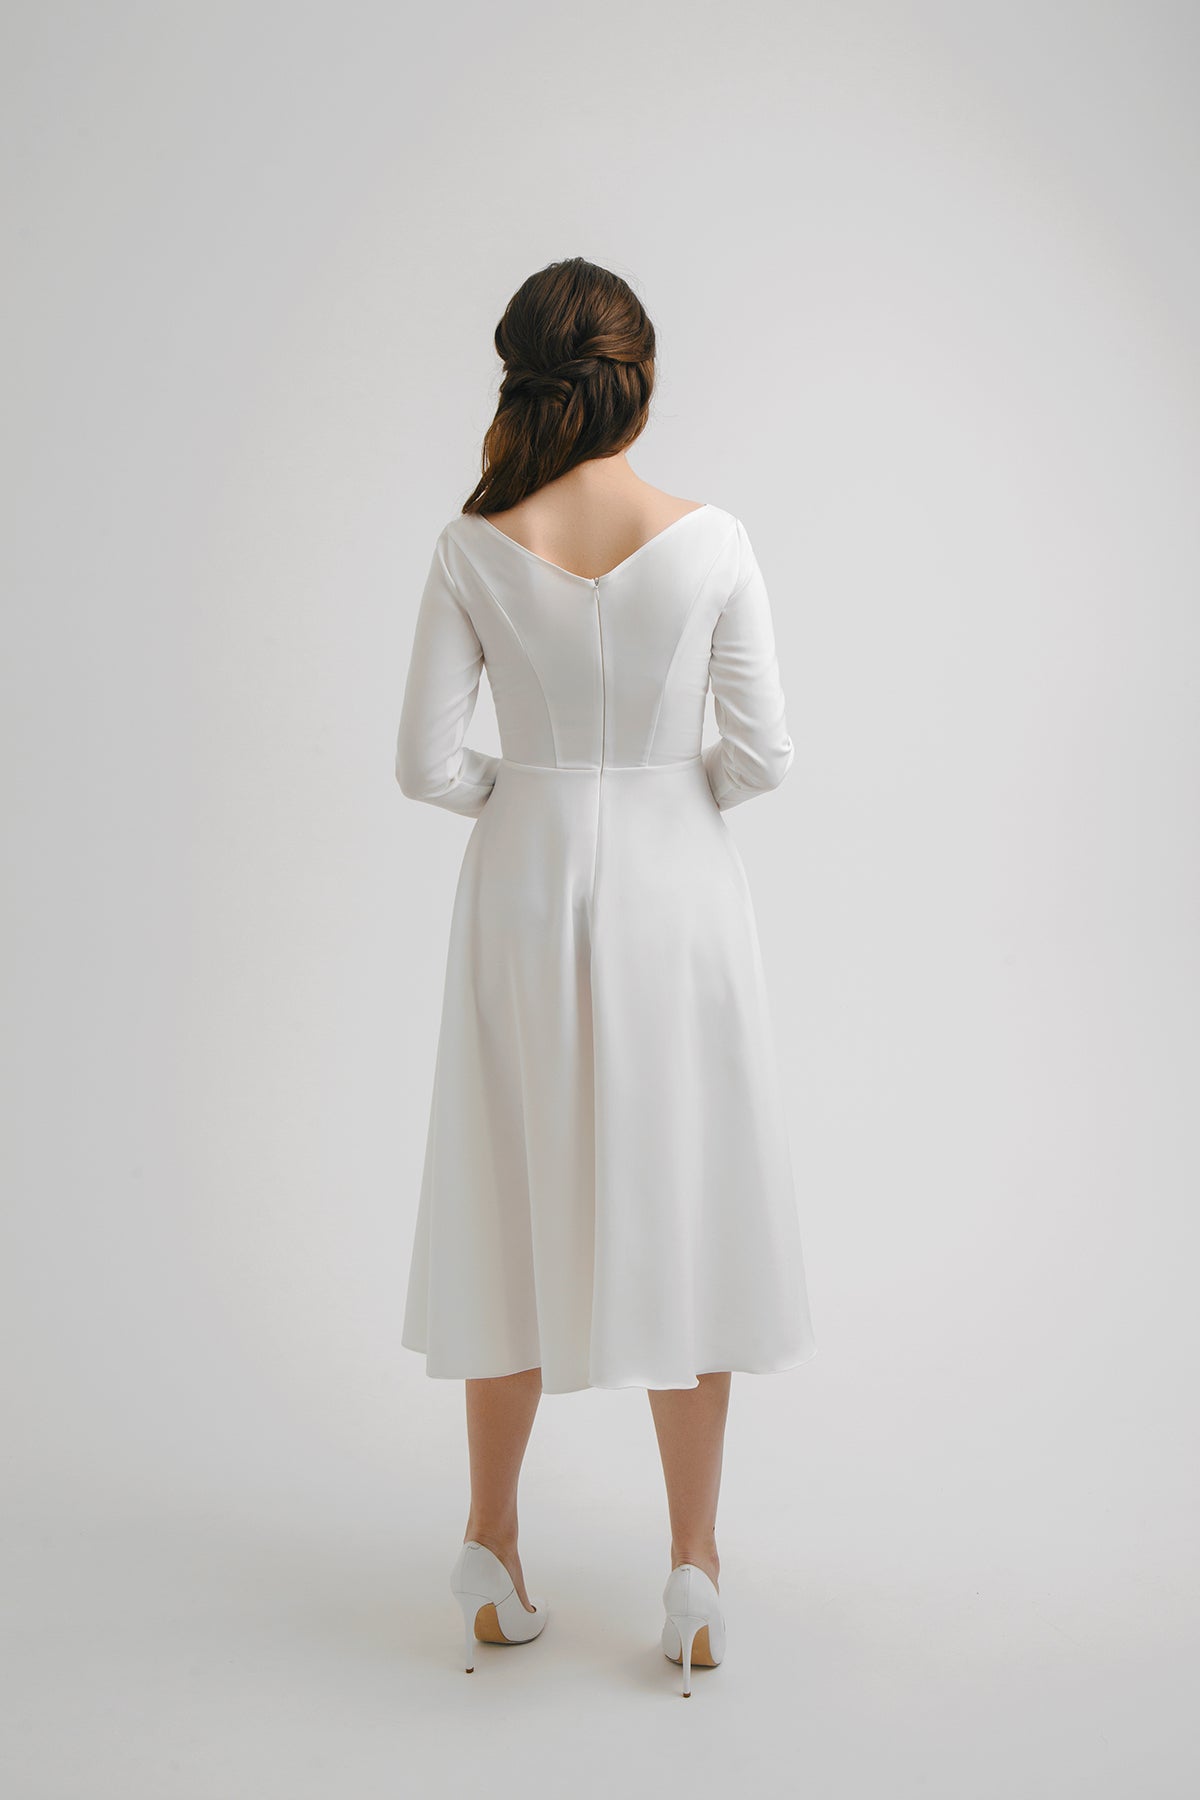 Tea lenght wedding dress • long sleeve wedding dress • short wedding dress • modest wedding dress • minimalist dress